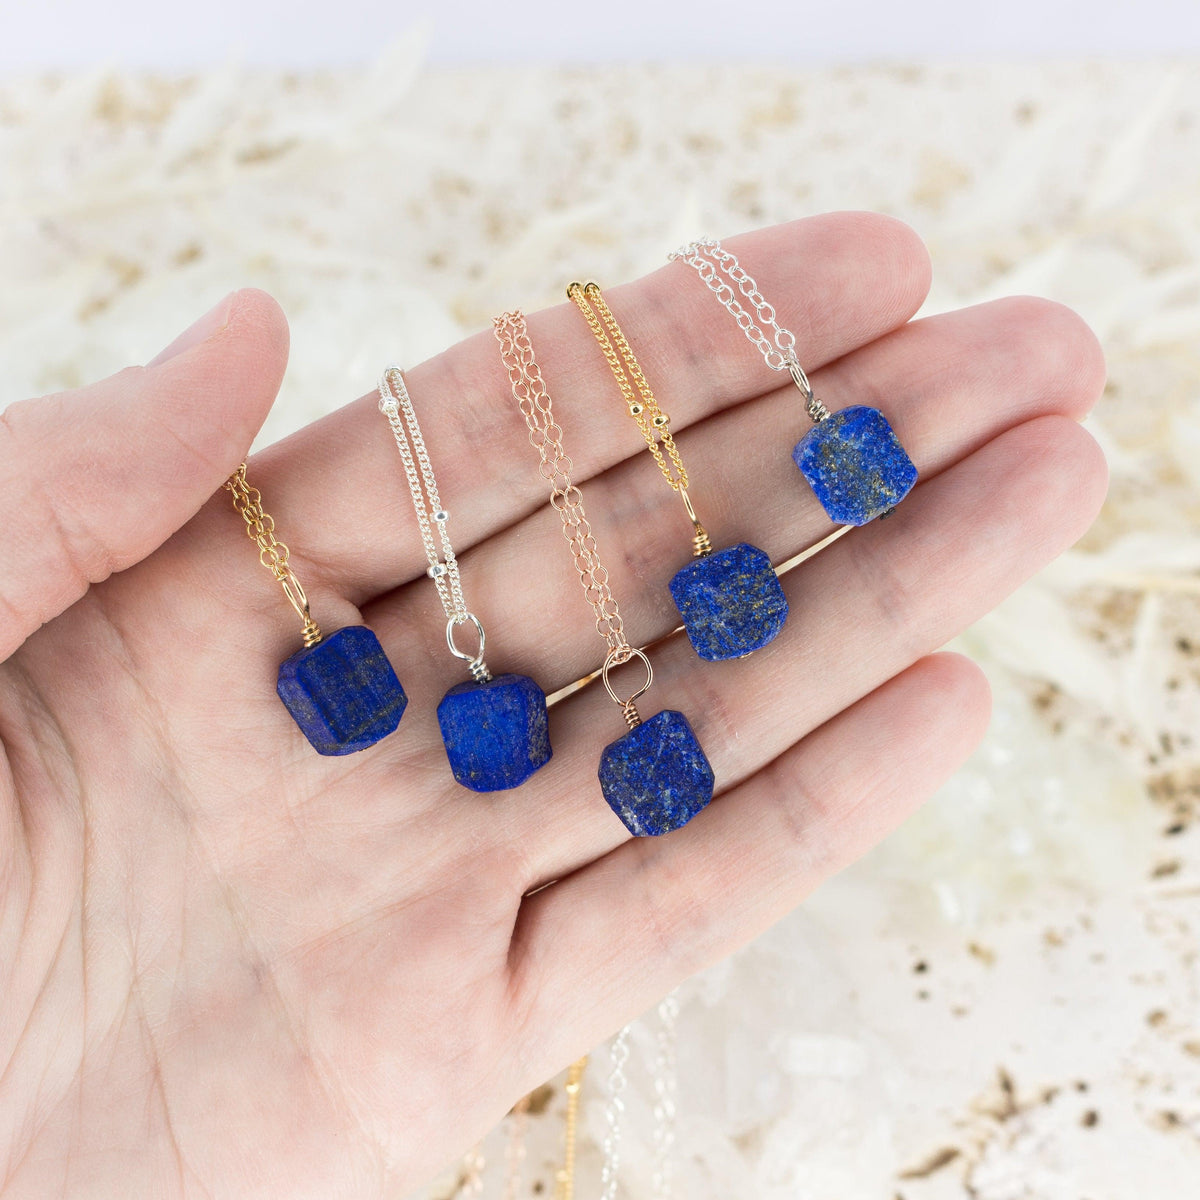 Tiny Raw Lapis Lazuli Pendant Necklace - Tiny Raw Lapis Lazuli Pendant Necklace - Sterling Silver / Cable - Luna Tide Handmade Crystal Jewellery